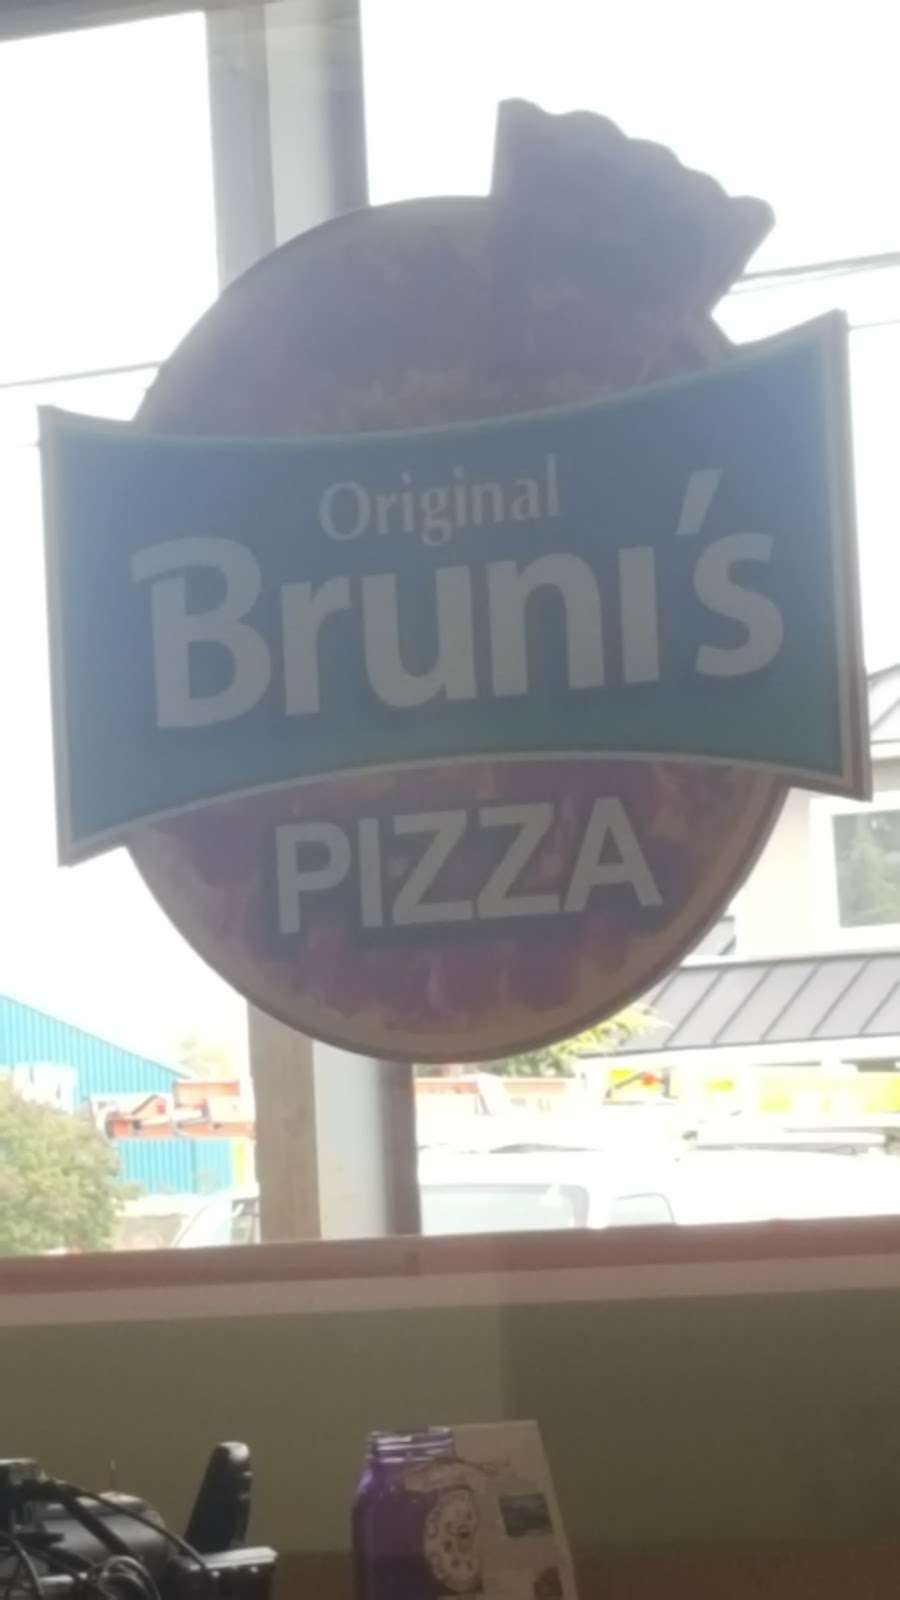 Brunis Pizza | 1613 NJ-47, Rio Grande, NJ 08242, USA | Phone: (609) 600-1114